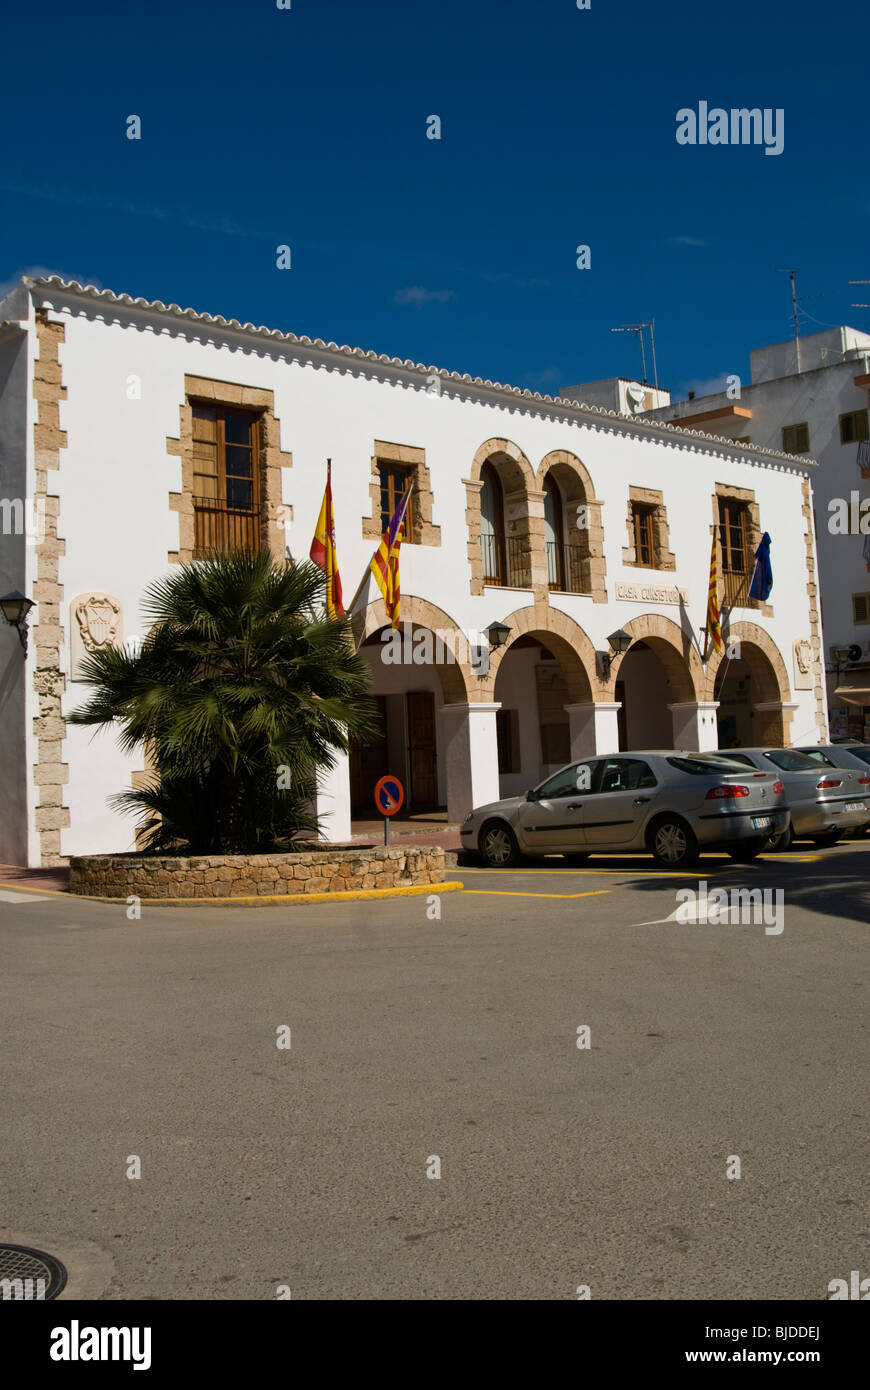 Town Hall of Santa Eulalia, Ibiza, Spain Stock Photo